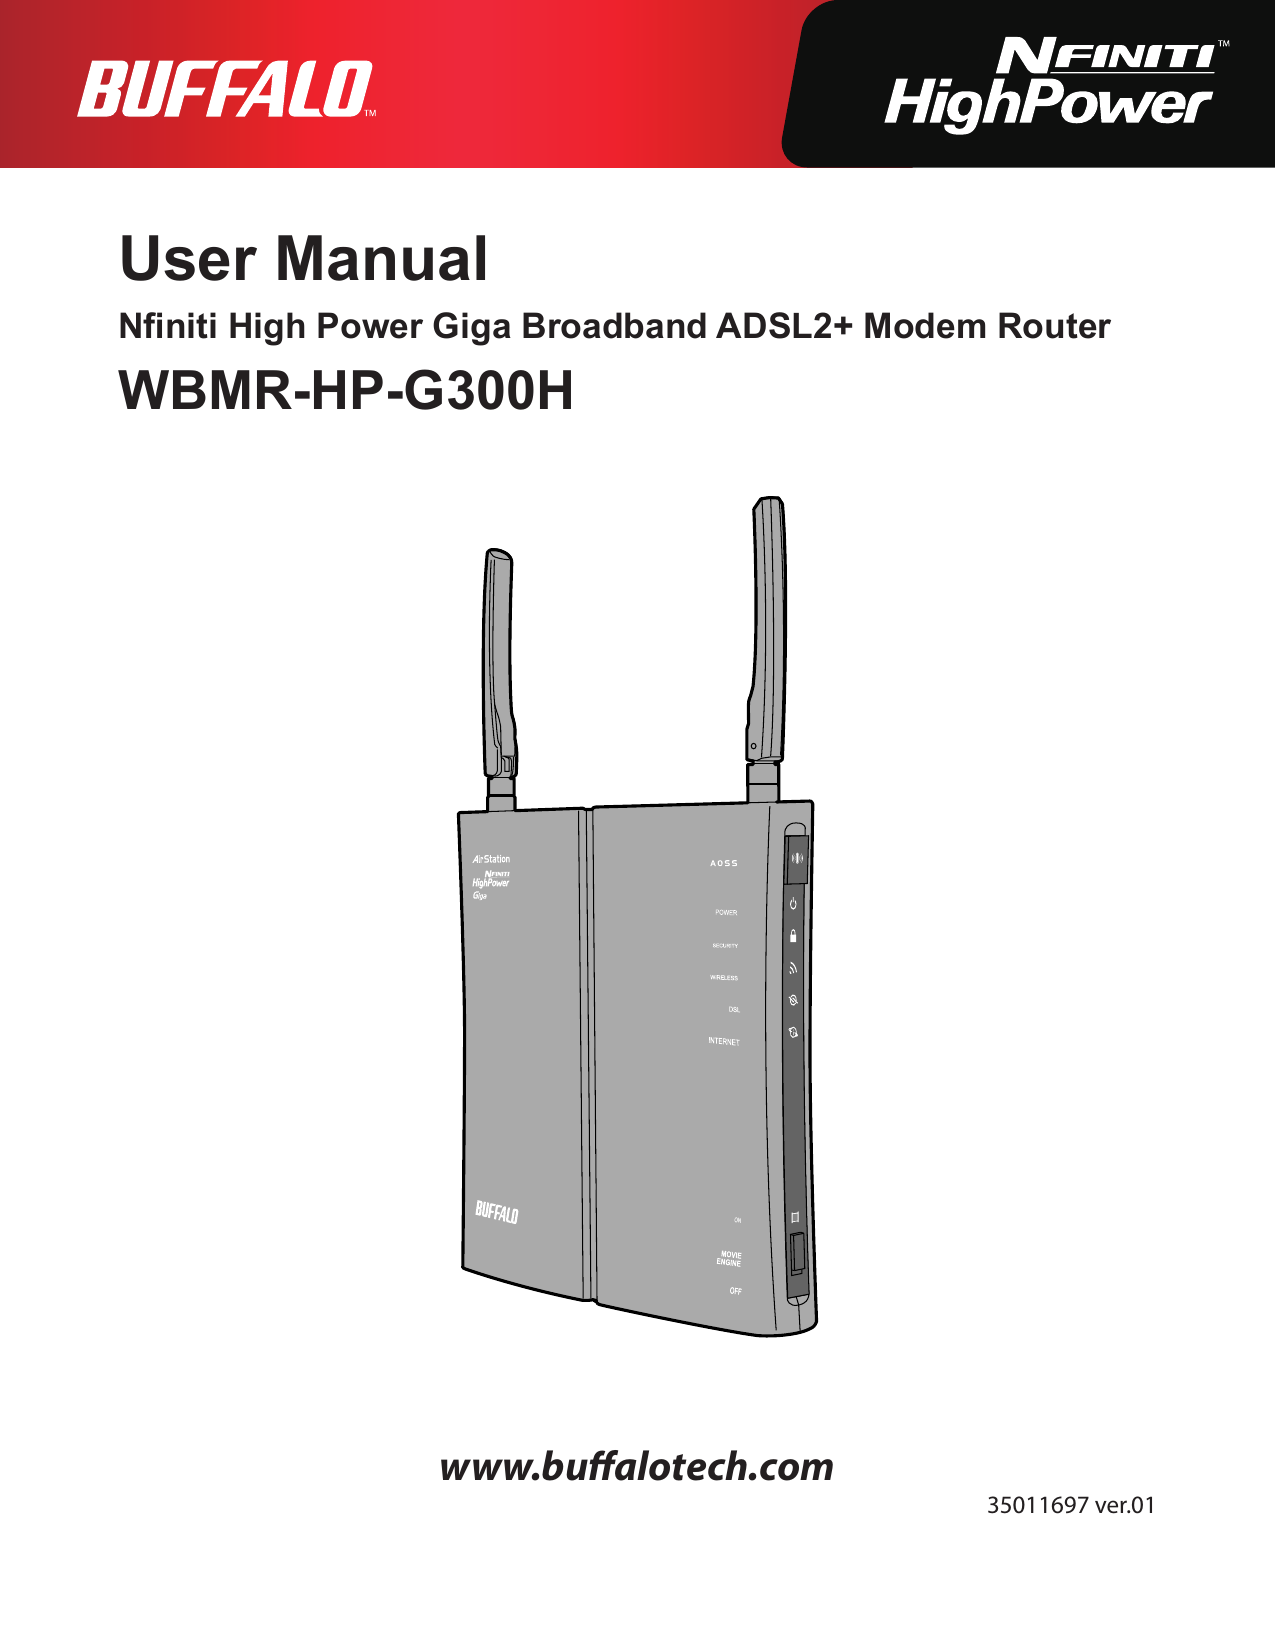 User ManualNniti High Power Giga Broadband ADSL2+ Modem RouterWBMR-HP-G300Hwww.bualotech.com35011697 ver.01